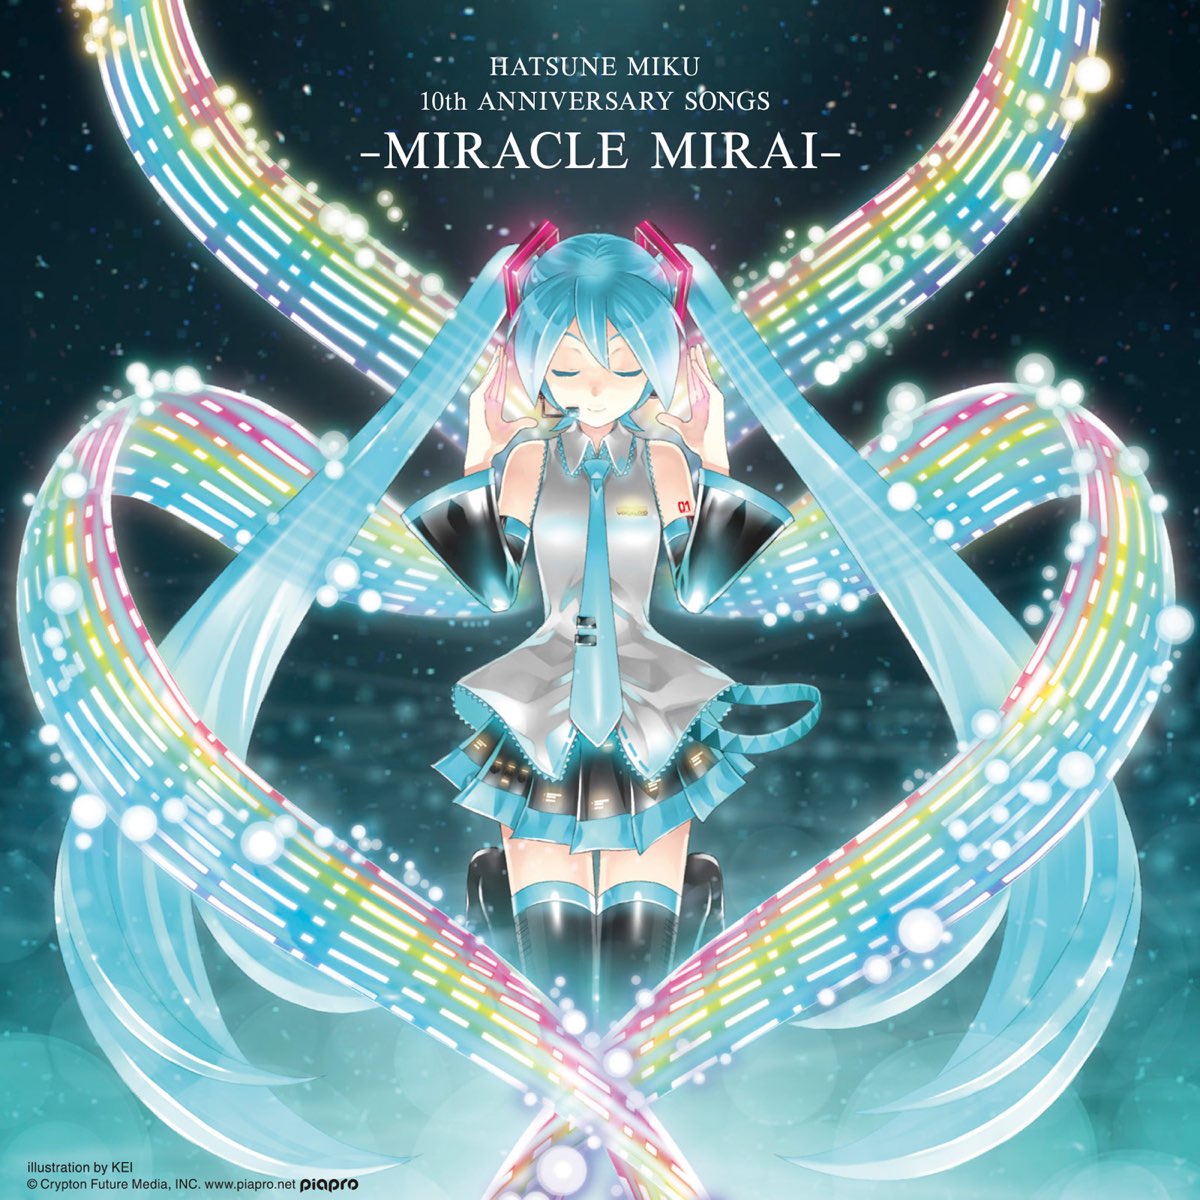 Hatsune Miku 10th Anniversary Songs - Miracle Mirai by Hatsune Miku on  Apple Music